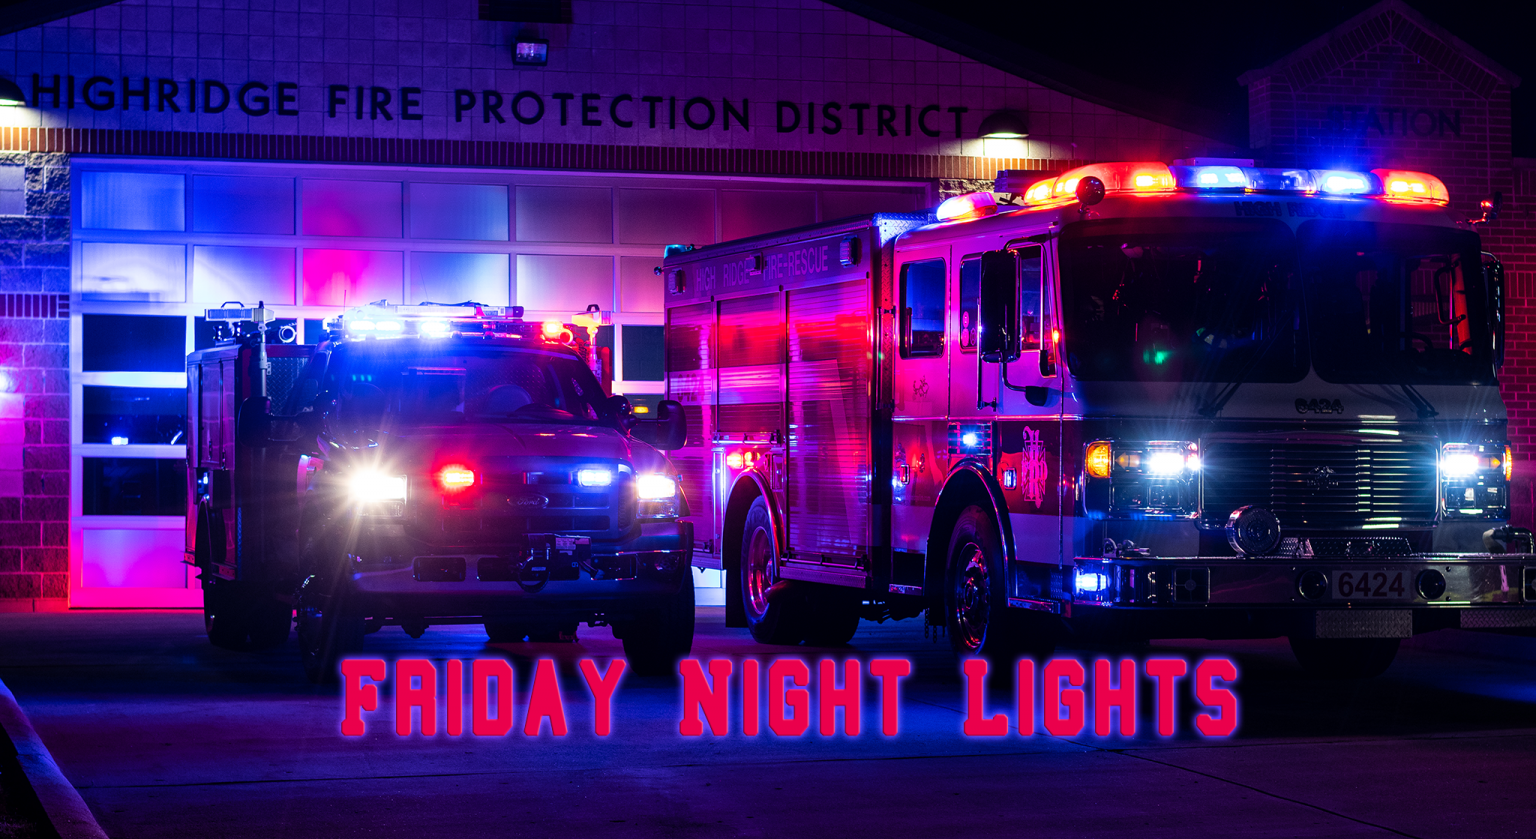 Friday Night Lights High Ridge Fire District